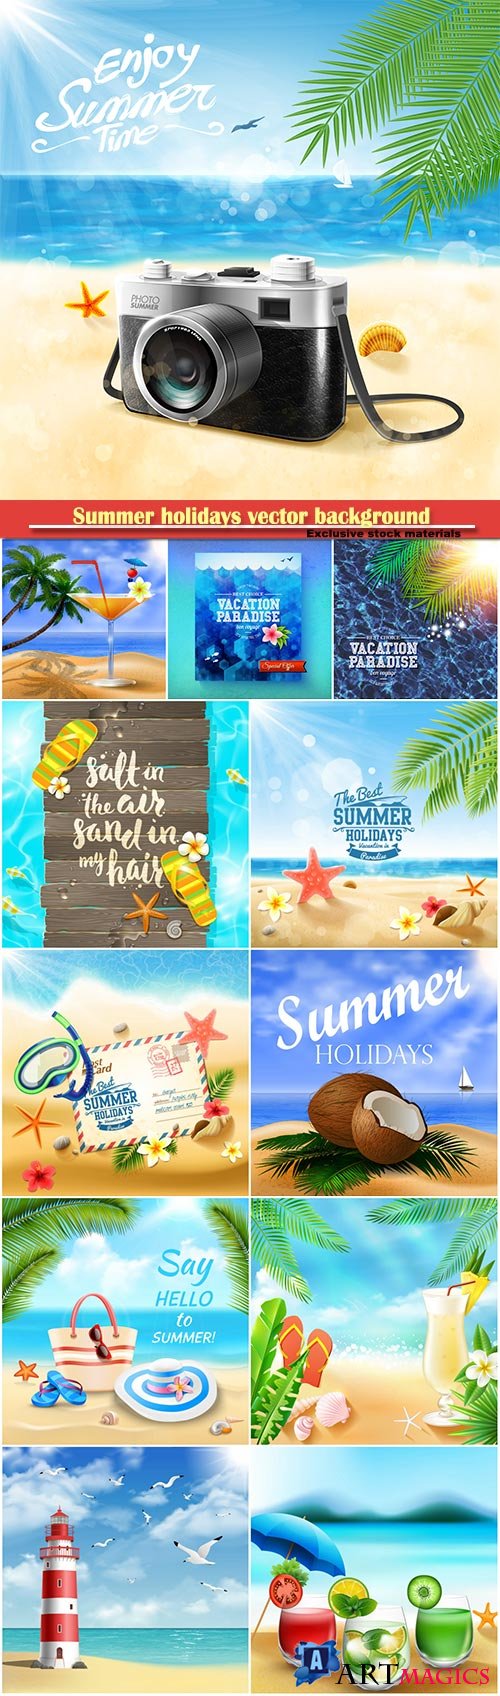 Summer holidays vector background, tropical beach, sea, fresh cocktails, sand # 10